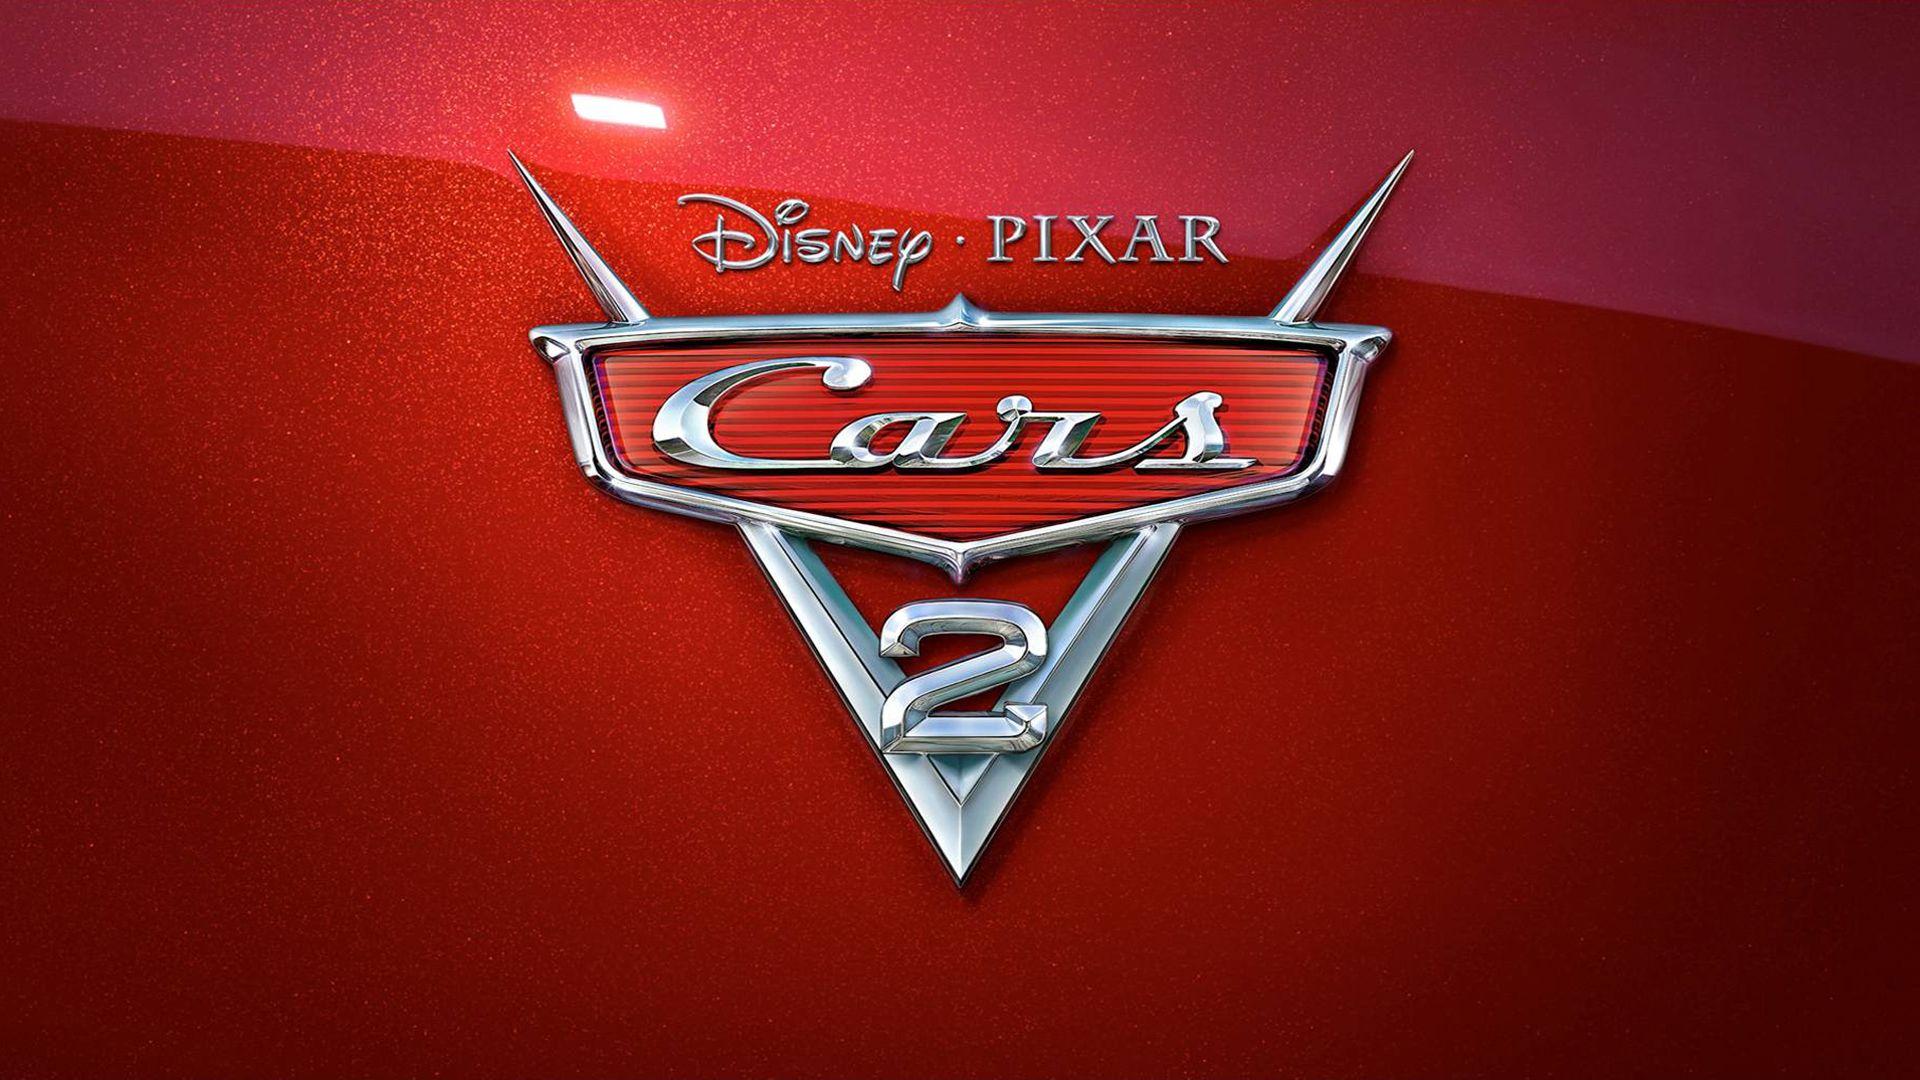 disney pixar cars logo movie wallpaper